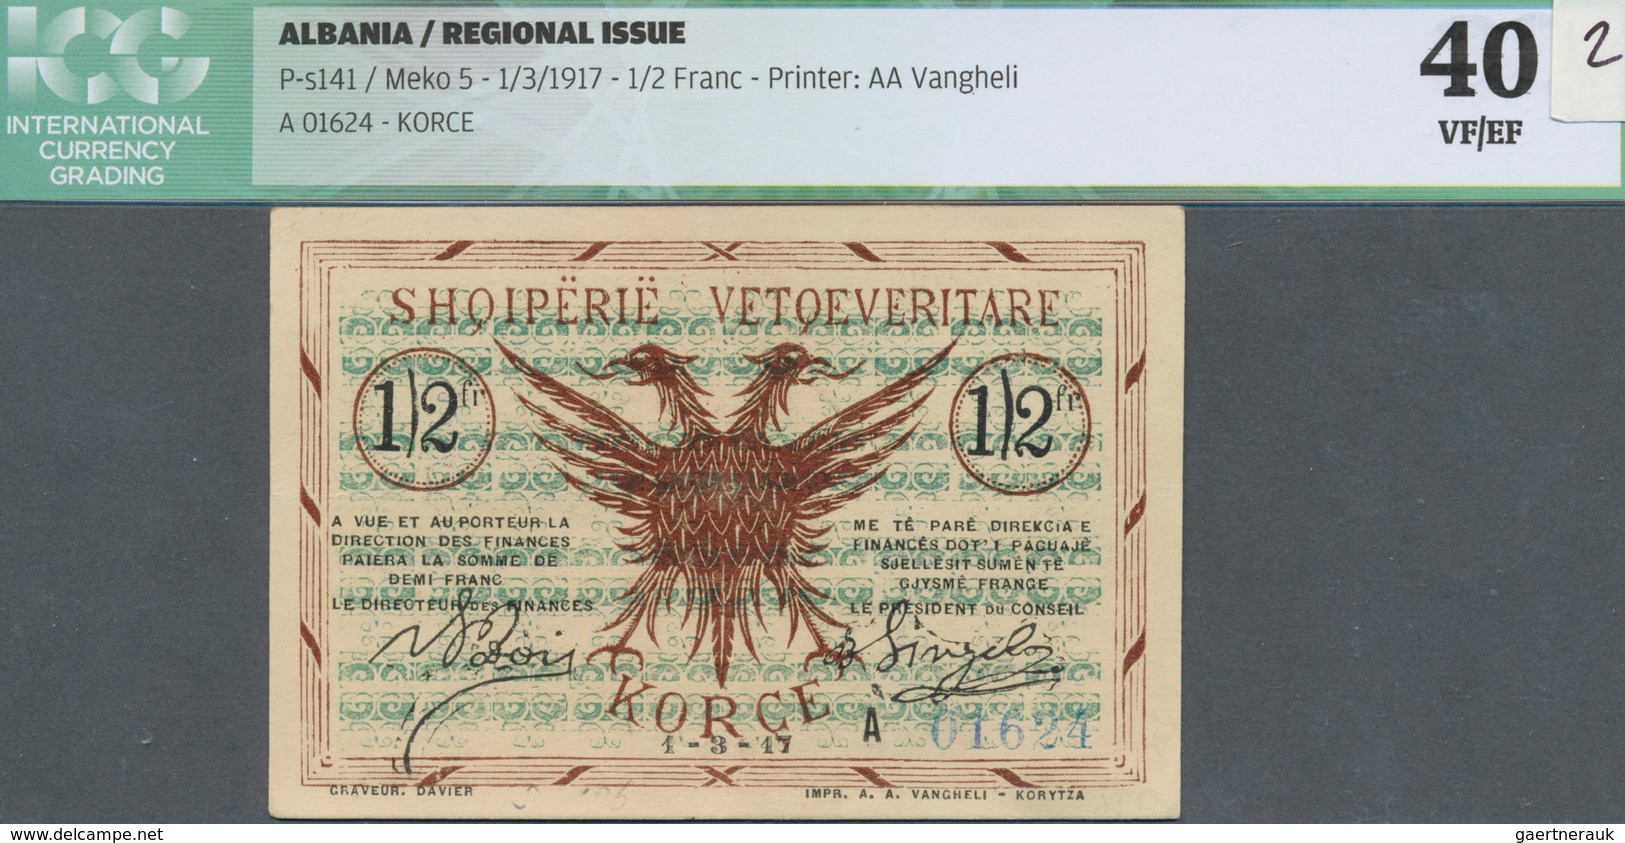 Albania / Albanien: 1/2 Franc 01.03.1917 P. S141, Printer AA Vangheli, S/N #A01624 With Center Fold, - Albanie